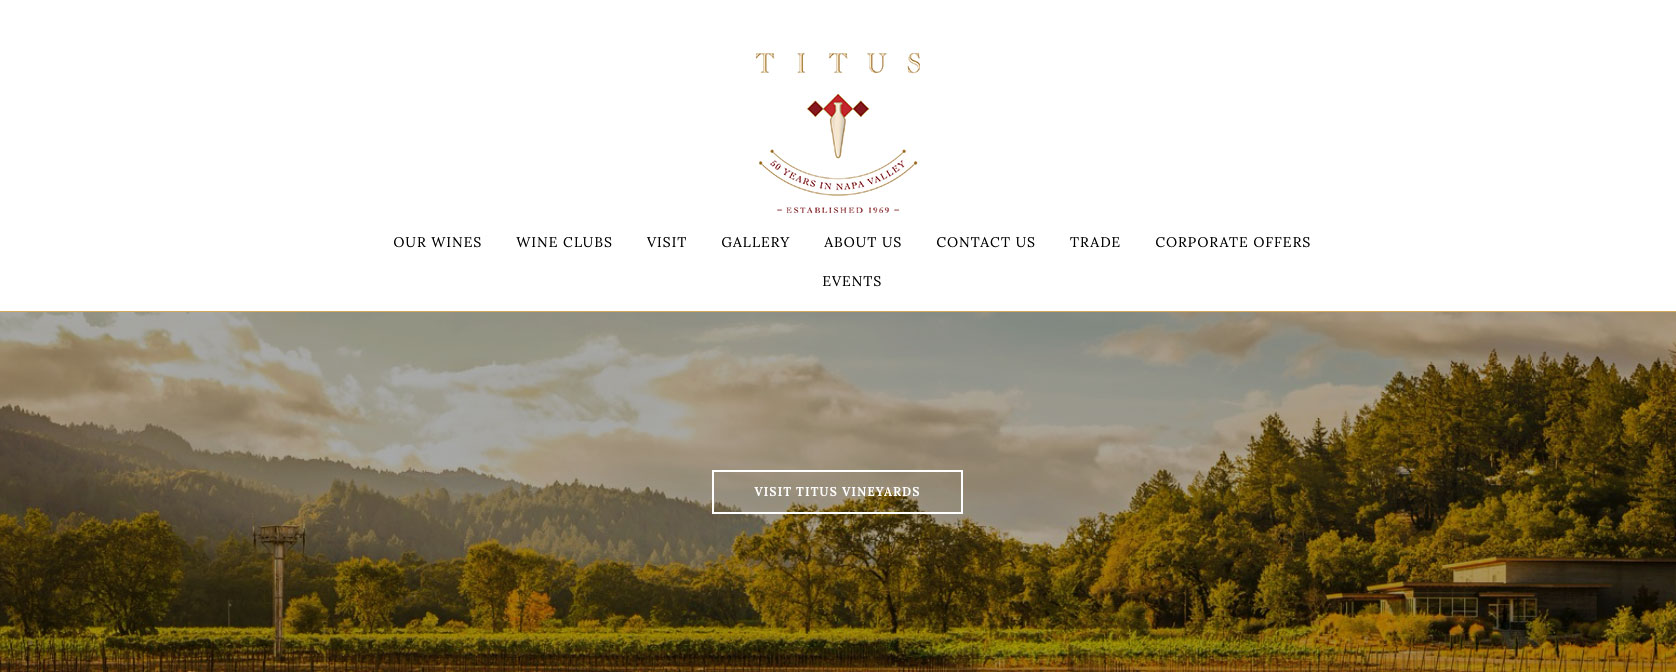 titus-vineyards-homepage-photo-by-Frank-Gutierrez